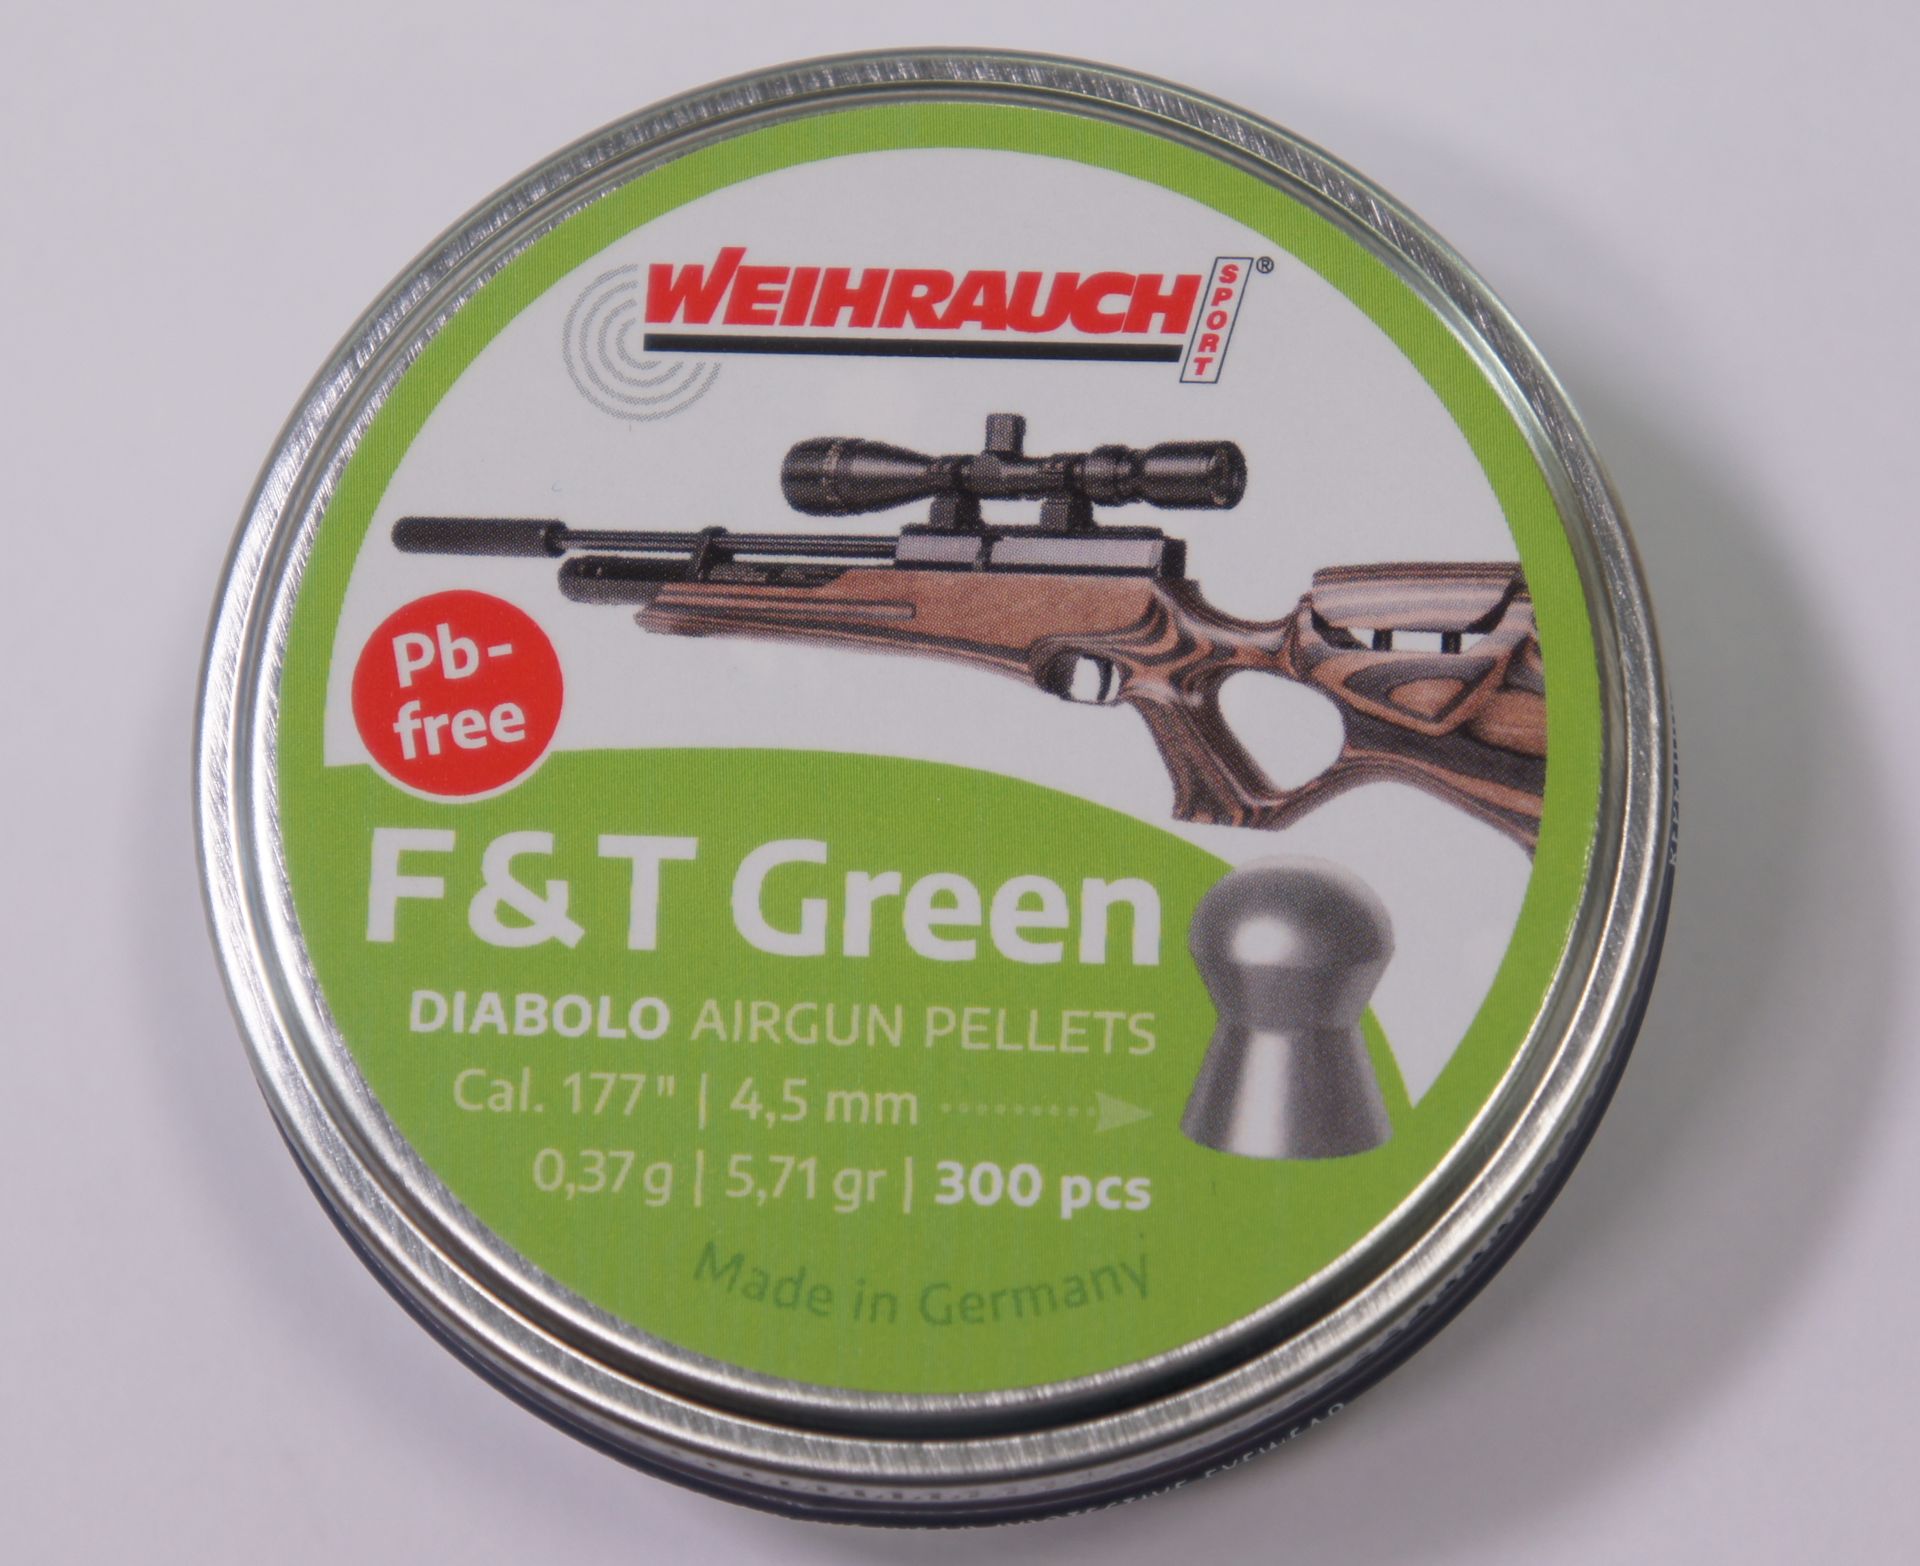 Bleifreie Weihrauch Diabolos F & T green, 4,5mm